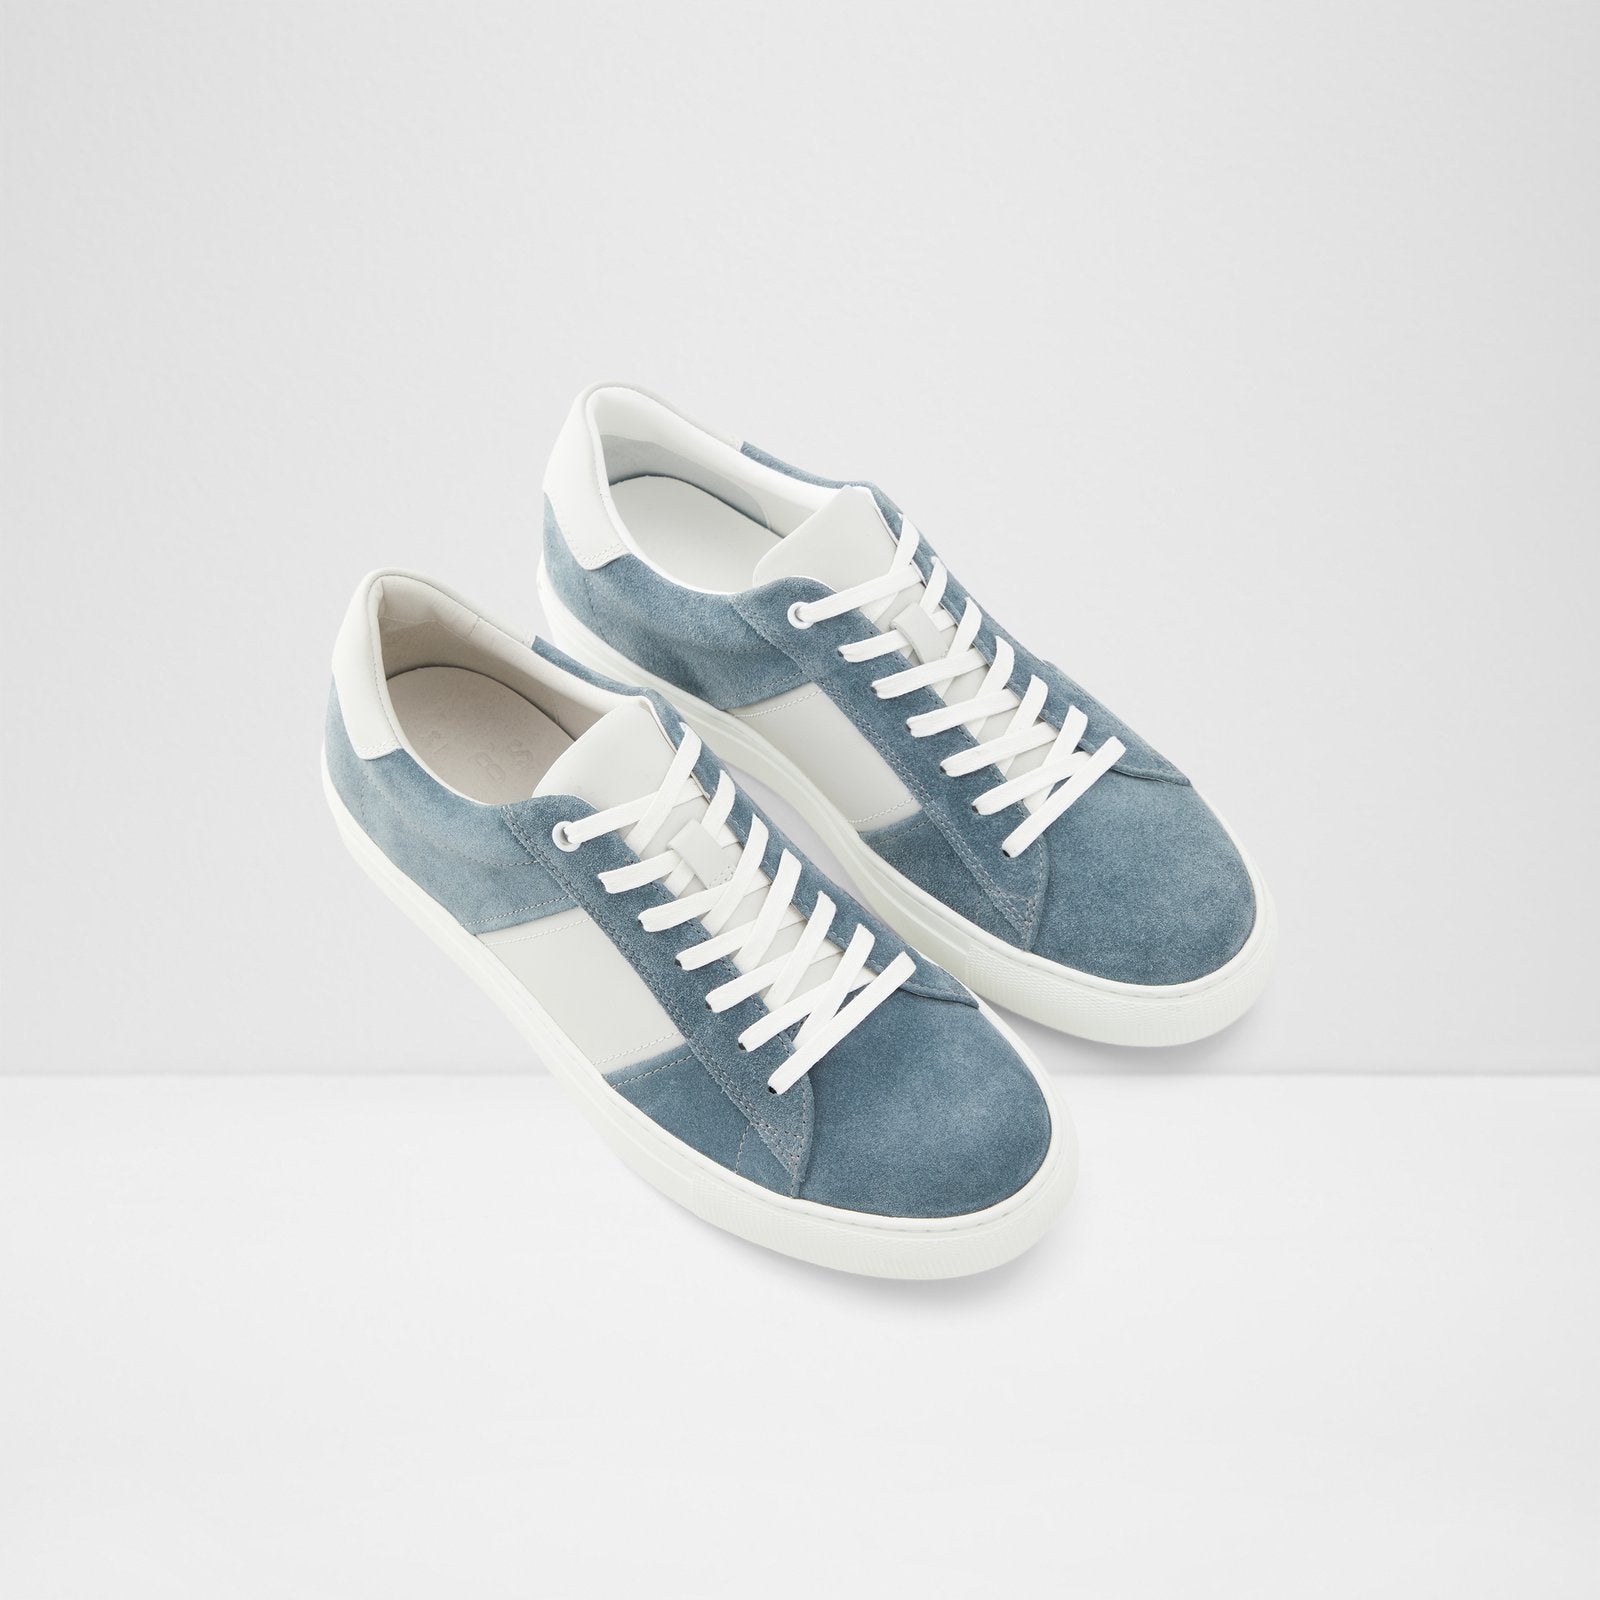 Meemar Men Shoes - Medium Blue - ALDO KSA